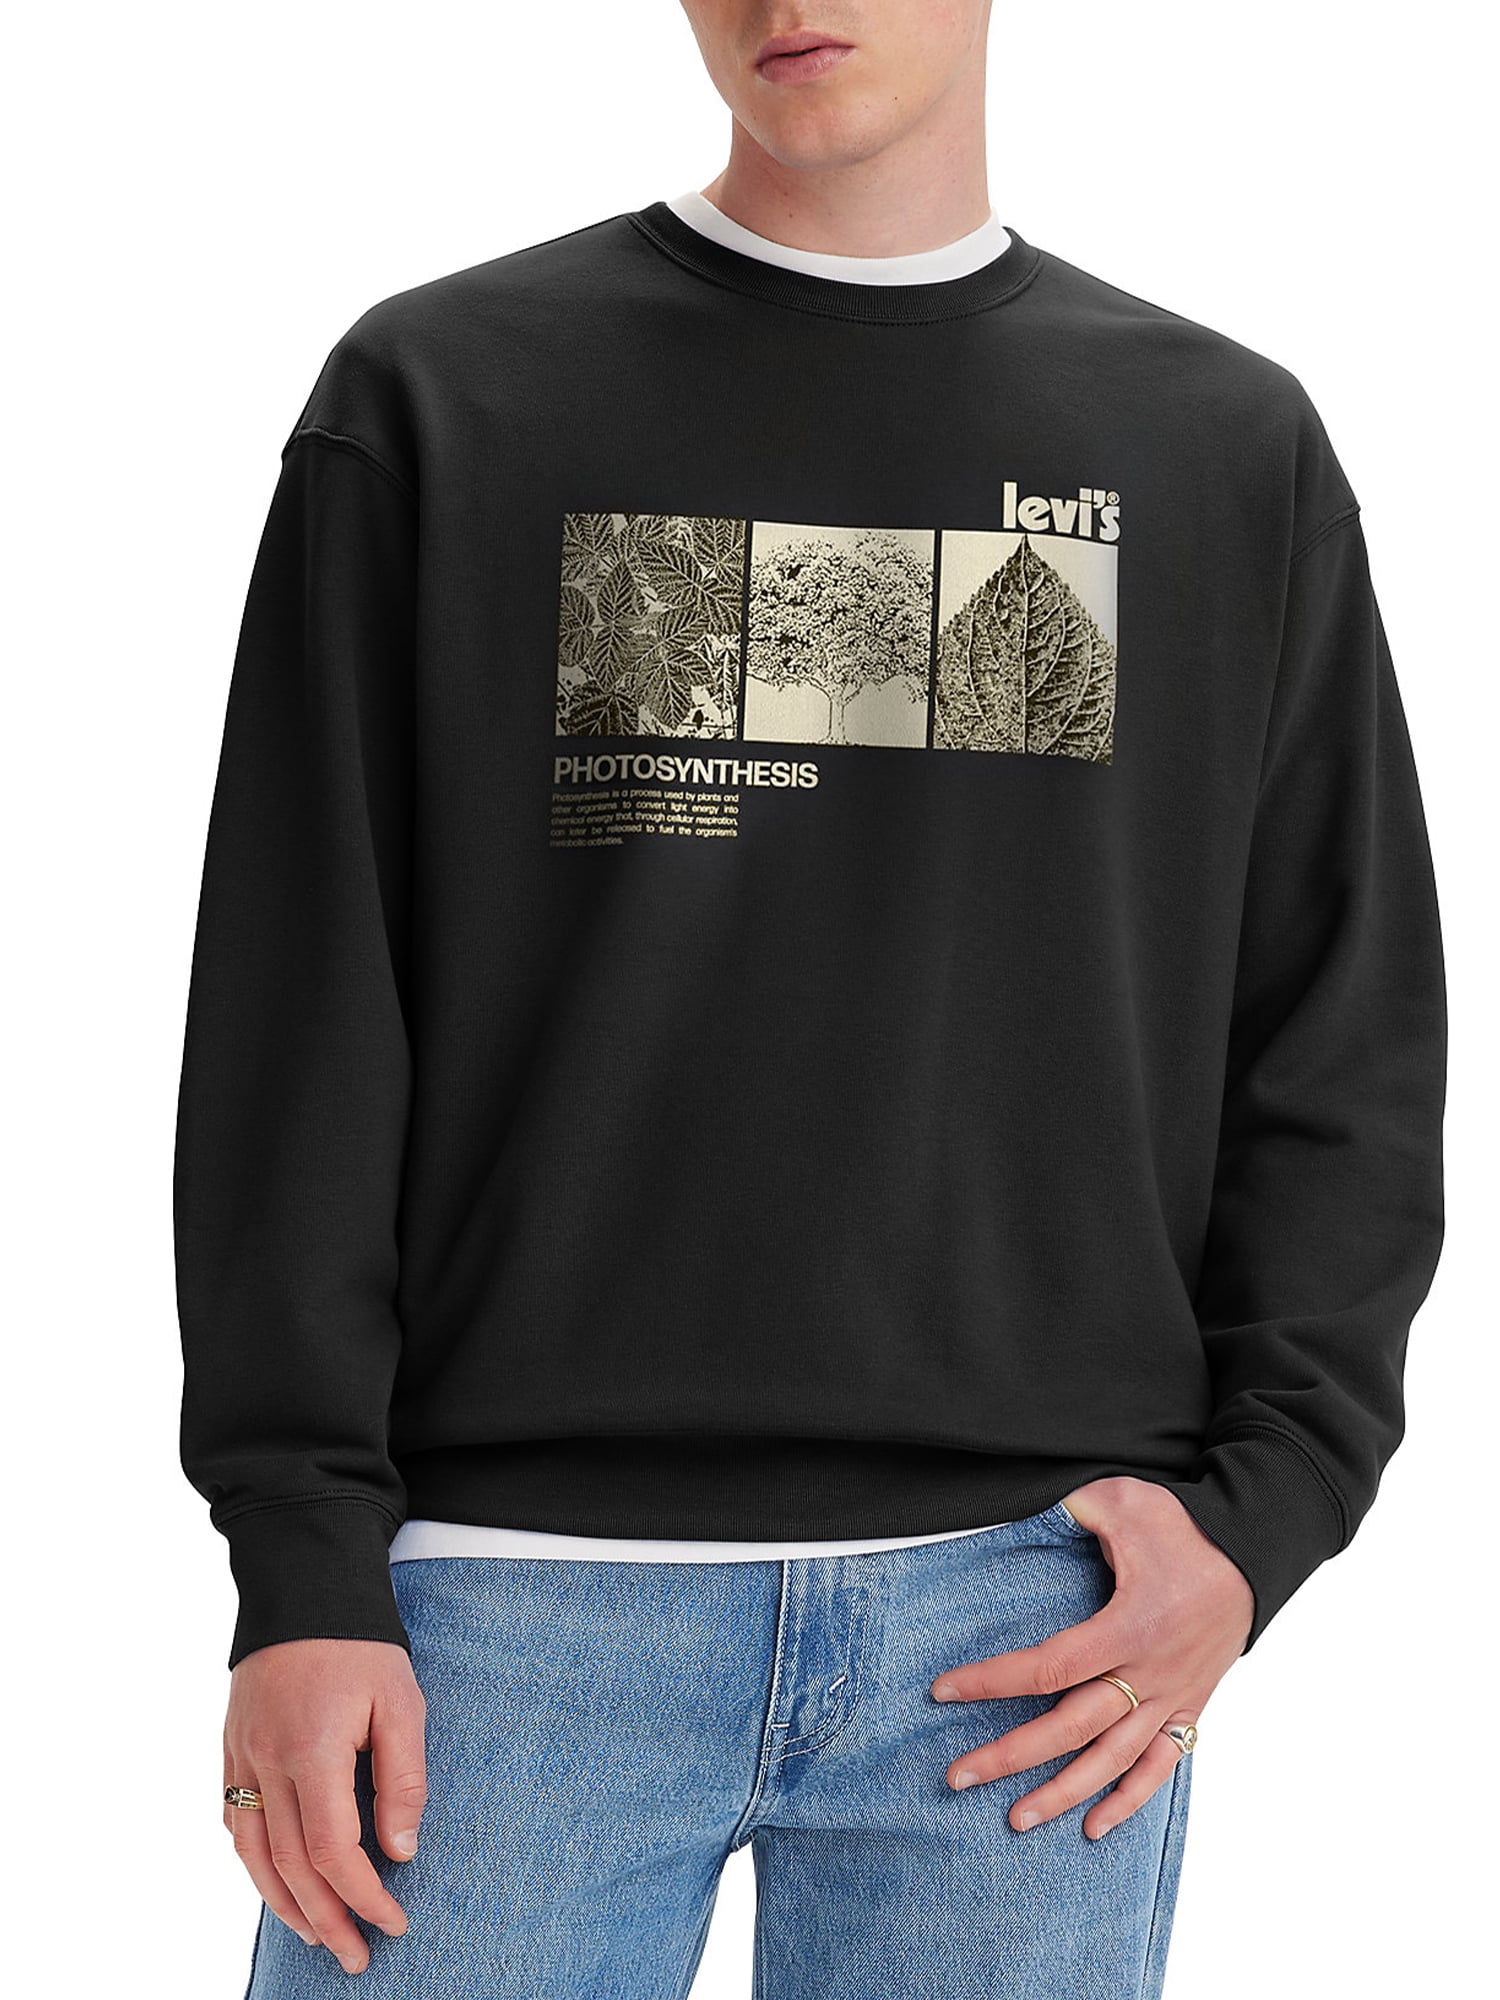 Levi's Men's Relaxed Graphic Crewneck Sweatshirt 